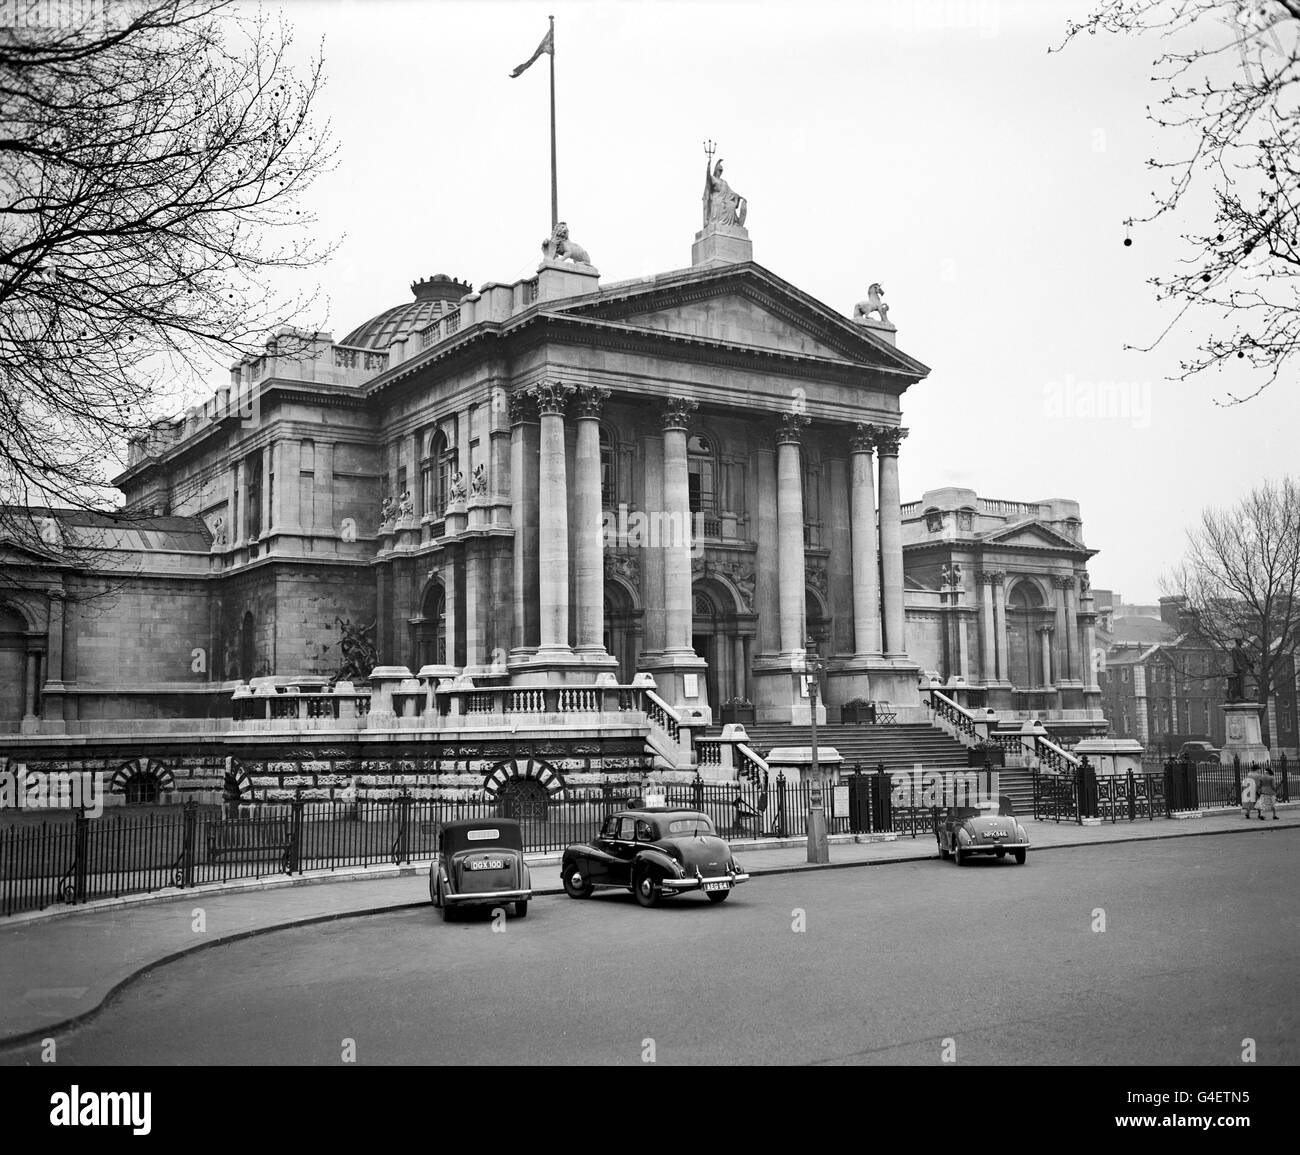 Buildings and Landmarks - Tate Gallery - London Stock Photo